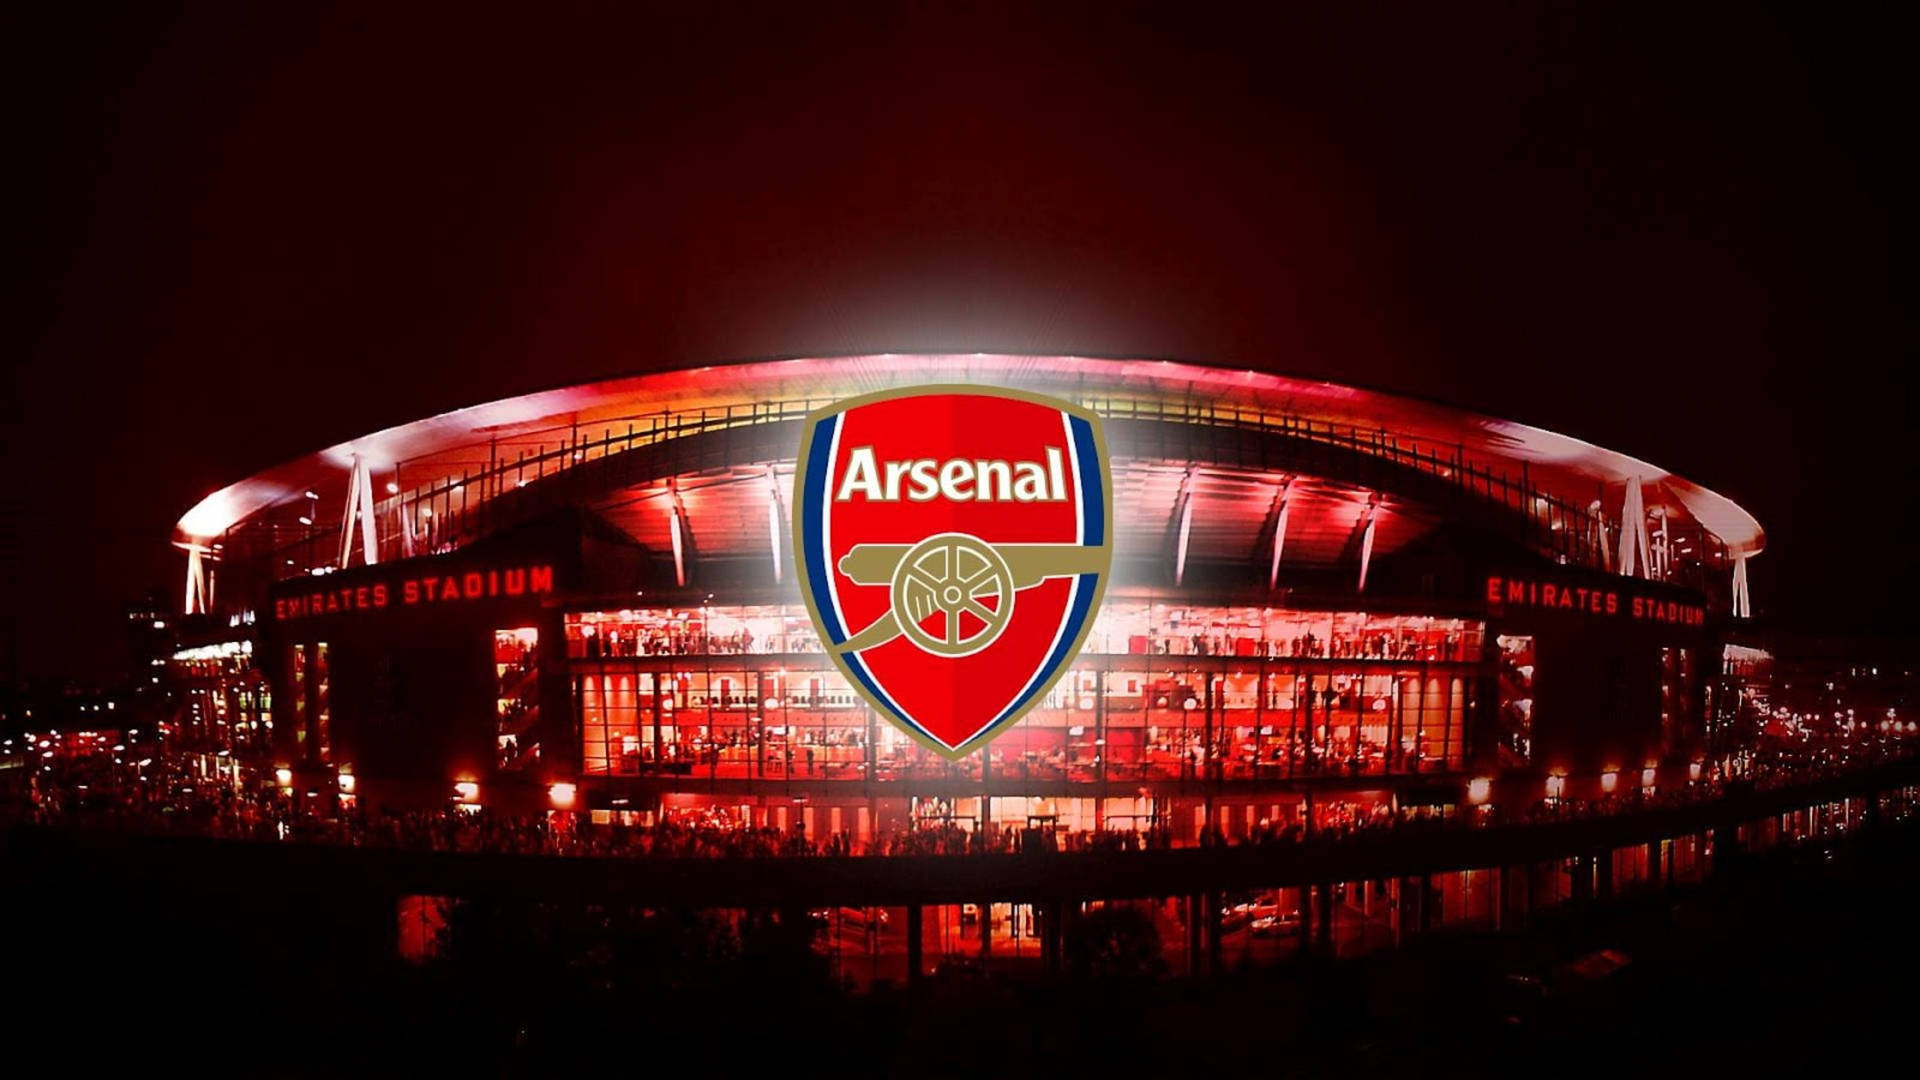 Red Aesthetic Arsenal Stadium Background